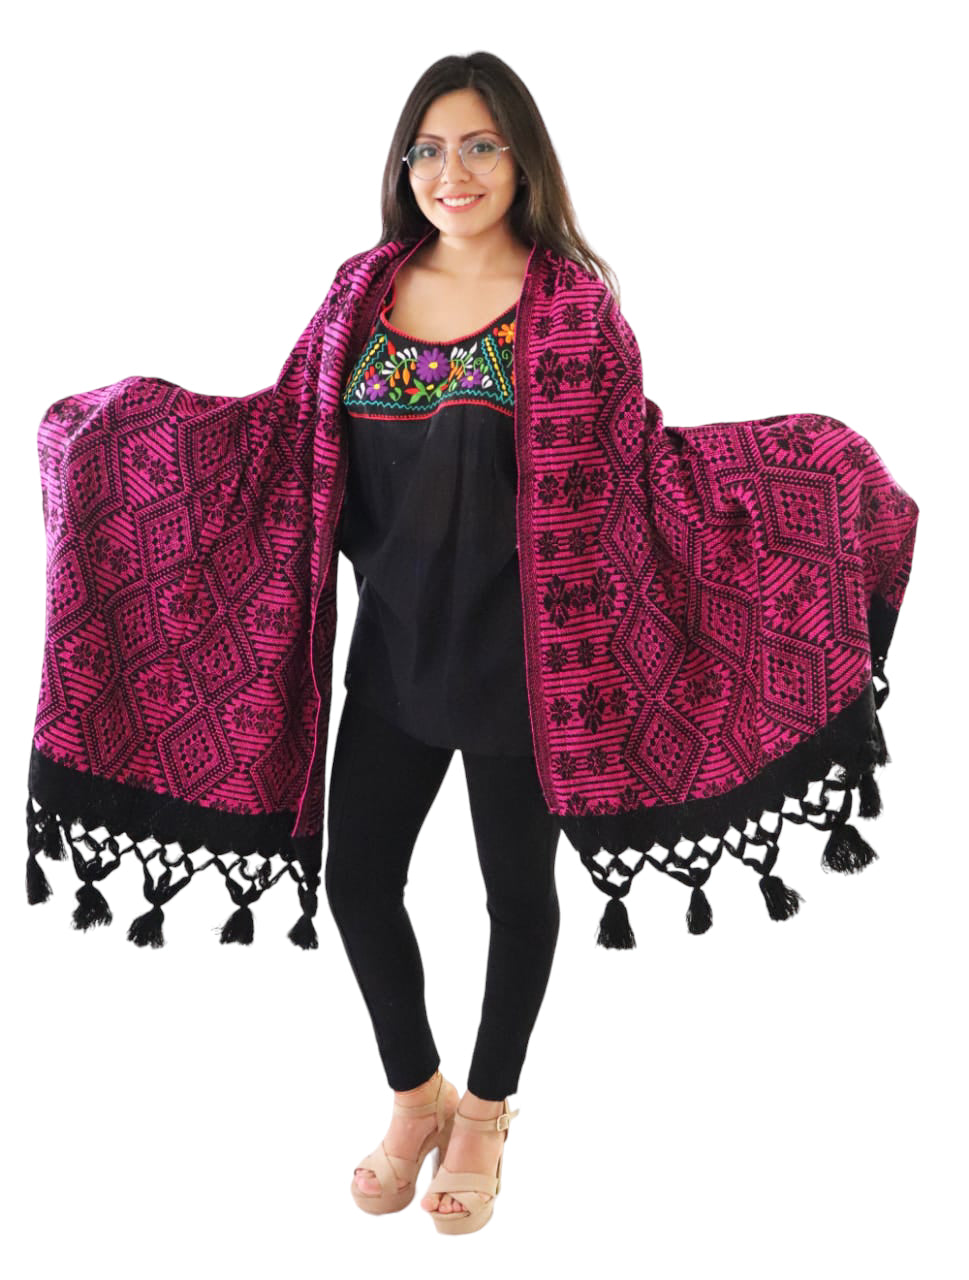 Handmade Traditional Woven Black & Pink Mexican Rebozo Scarf - Shawl Wrap